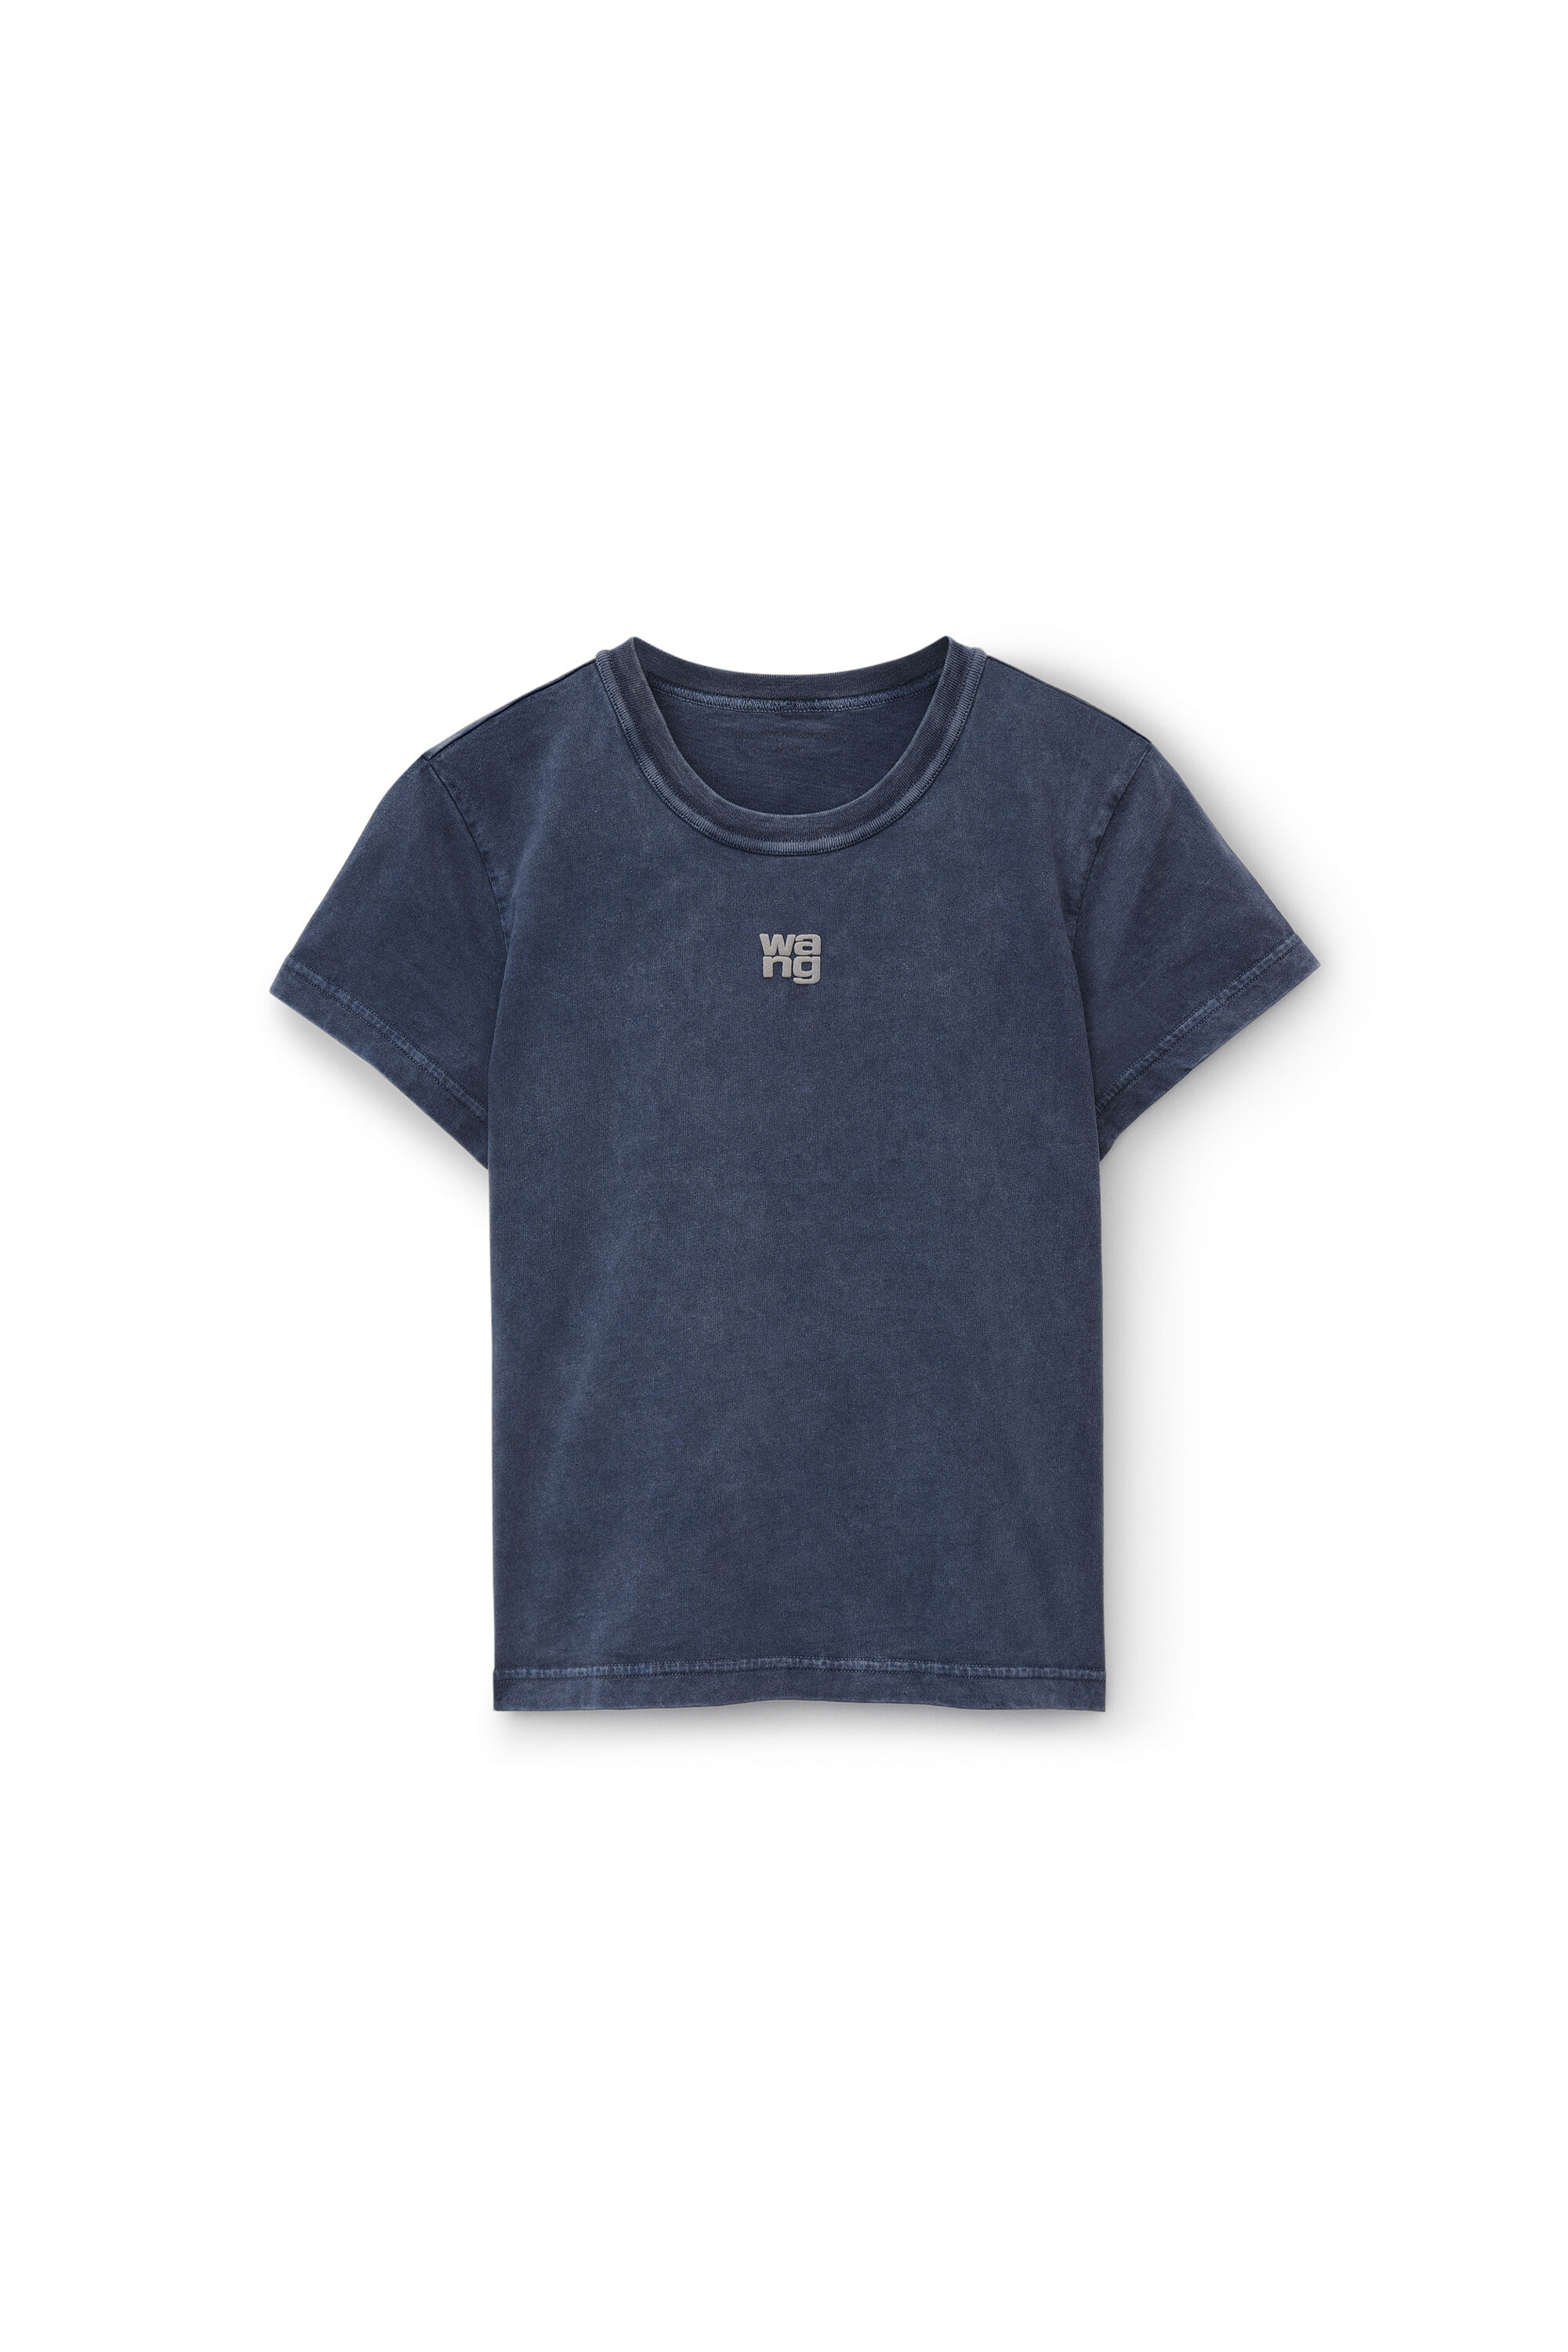 Puff logo shrunken tee in cotton jersey in MARITIME BLUE 